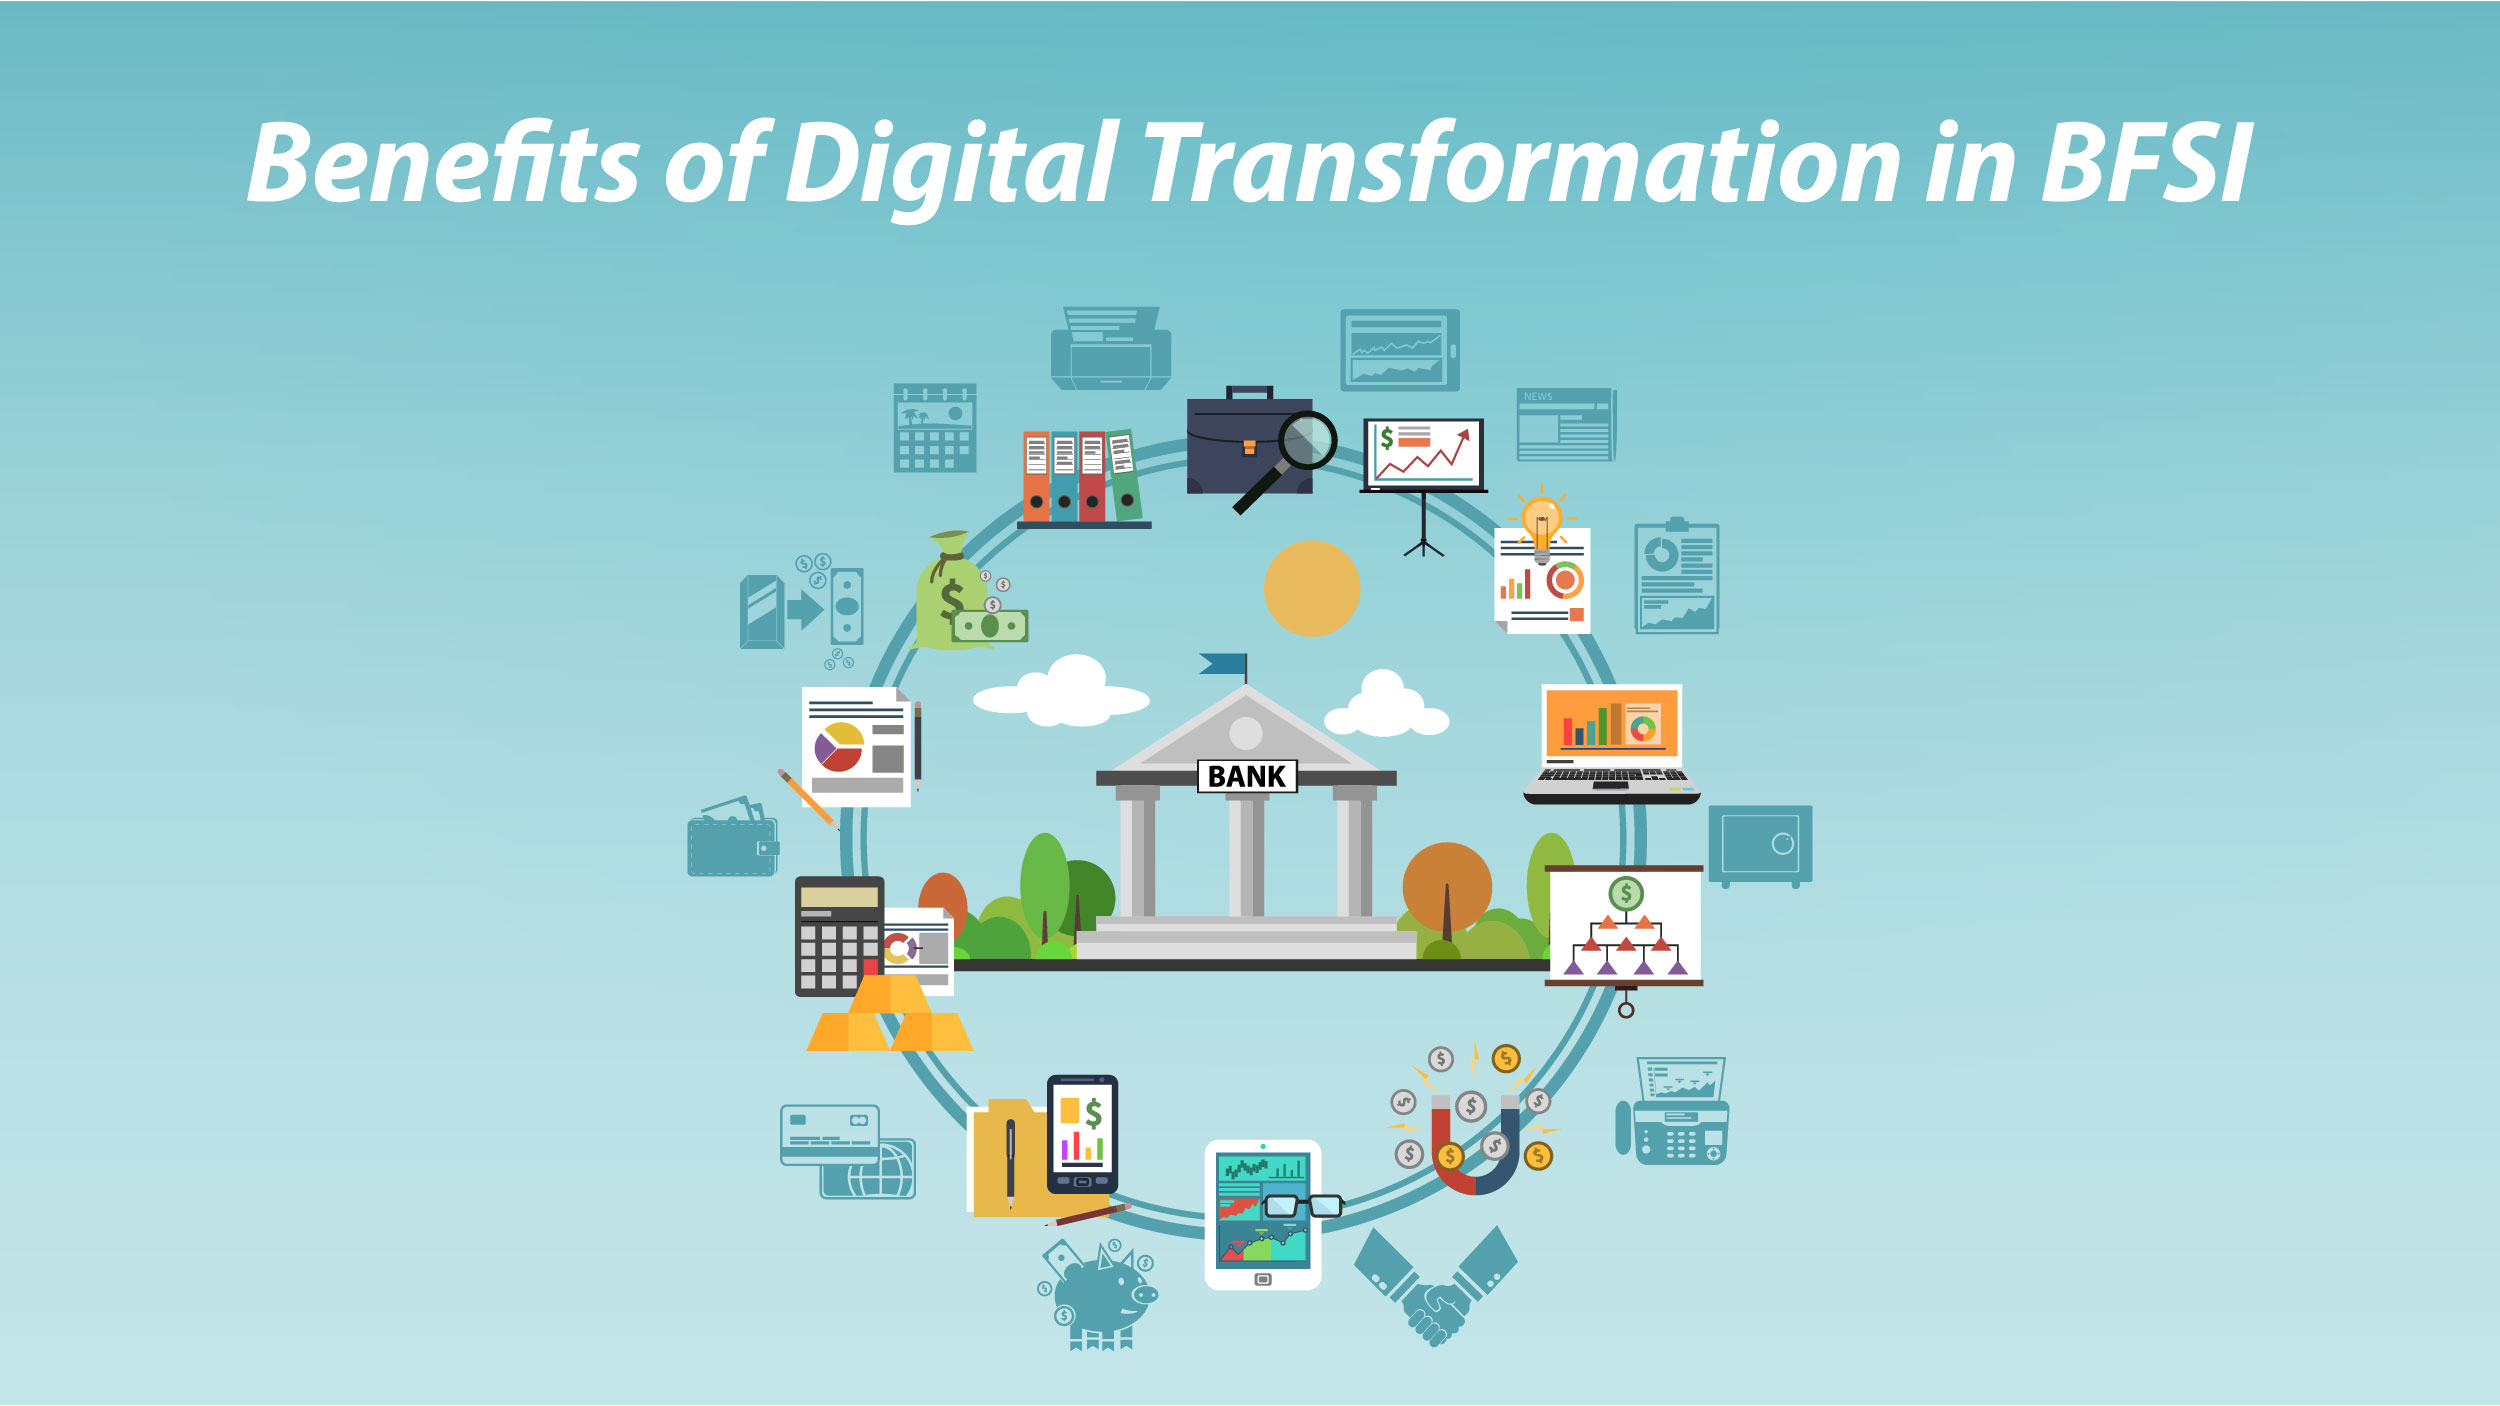 Digital Transformation in BFSi